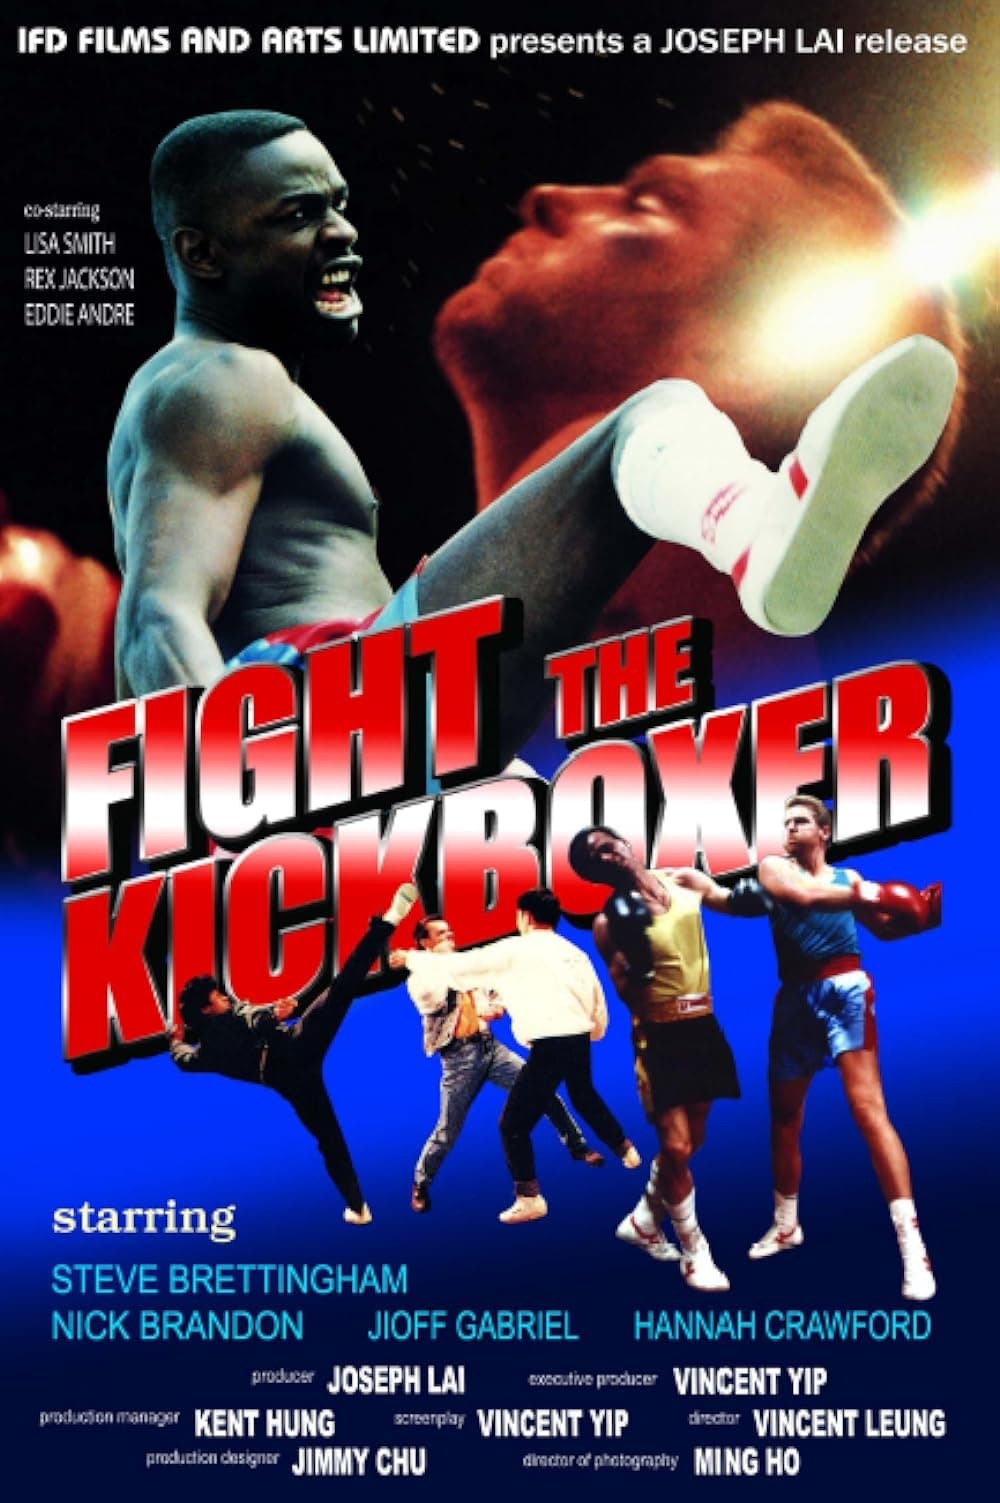 Fight the Kickboxer